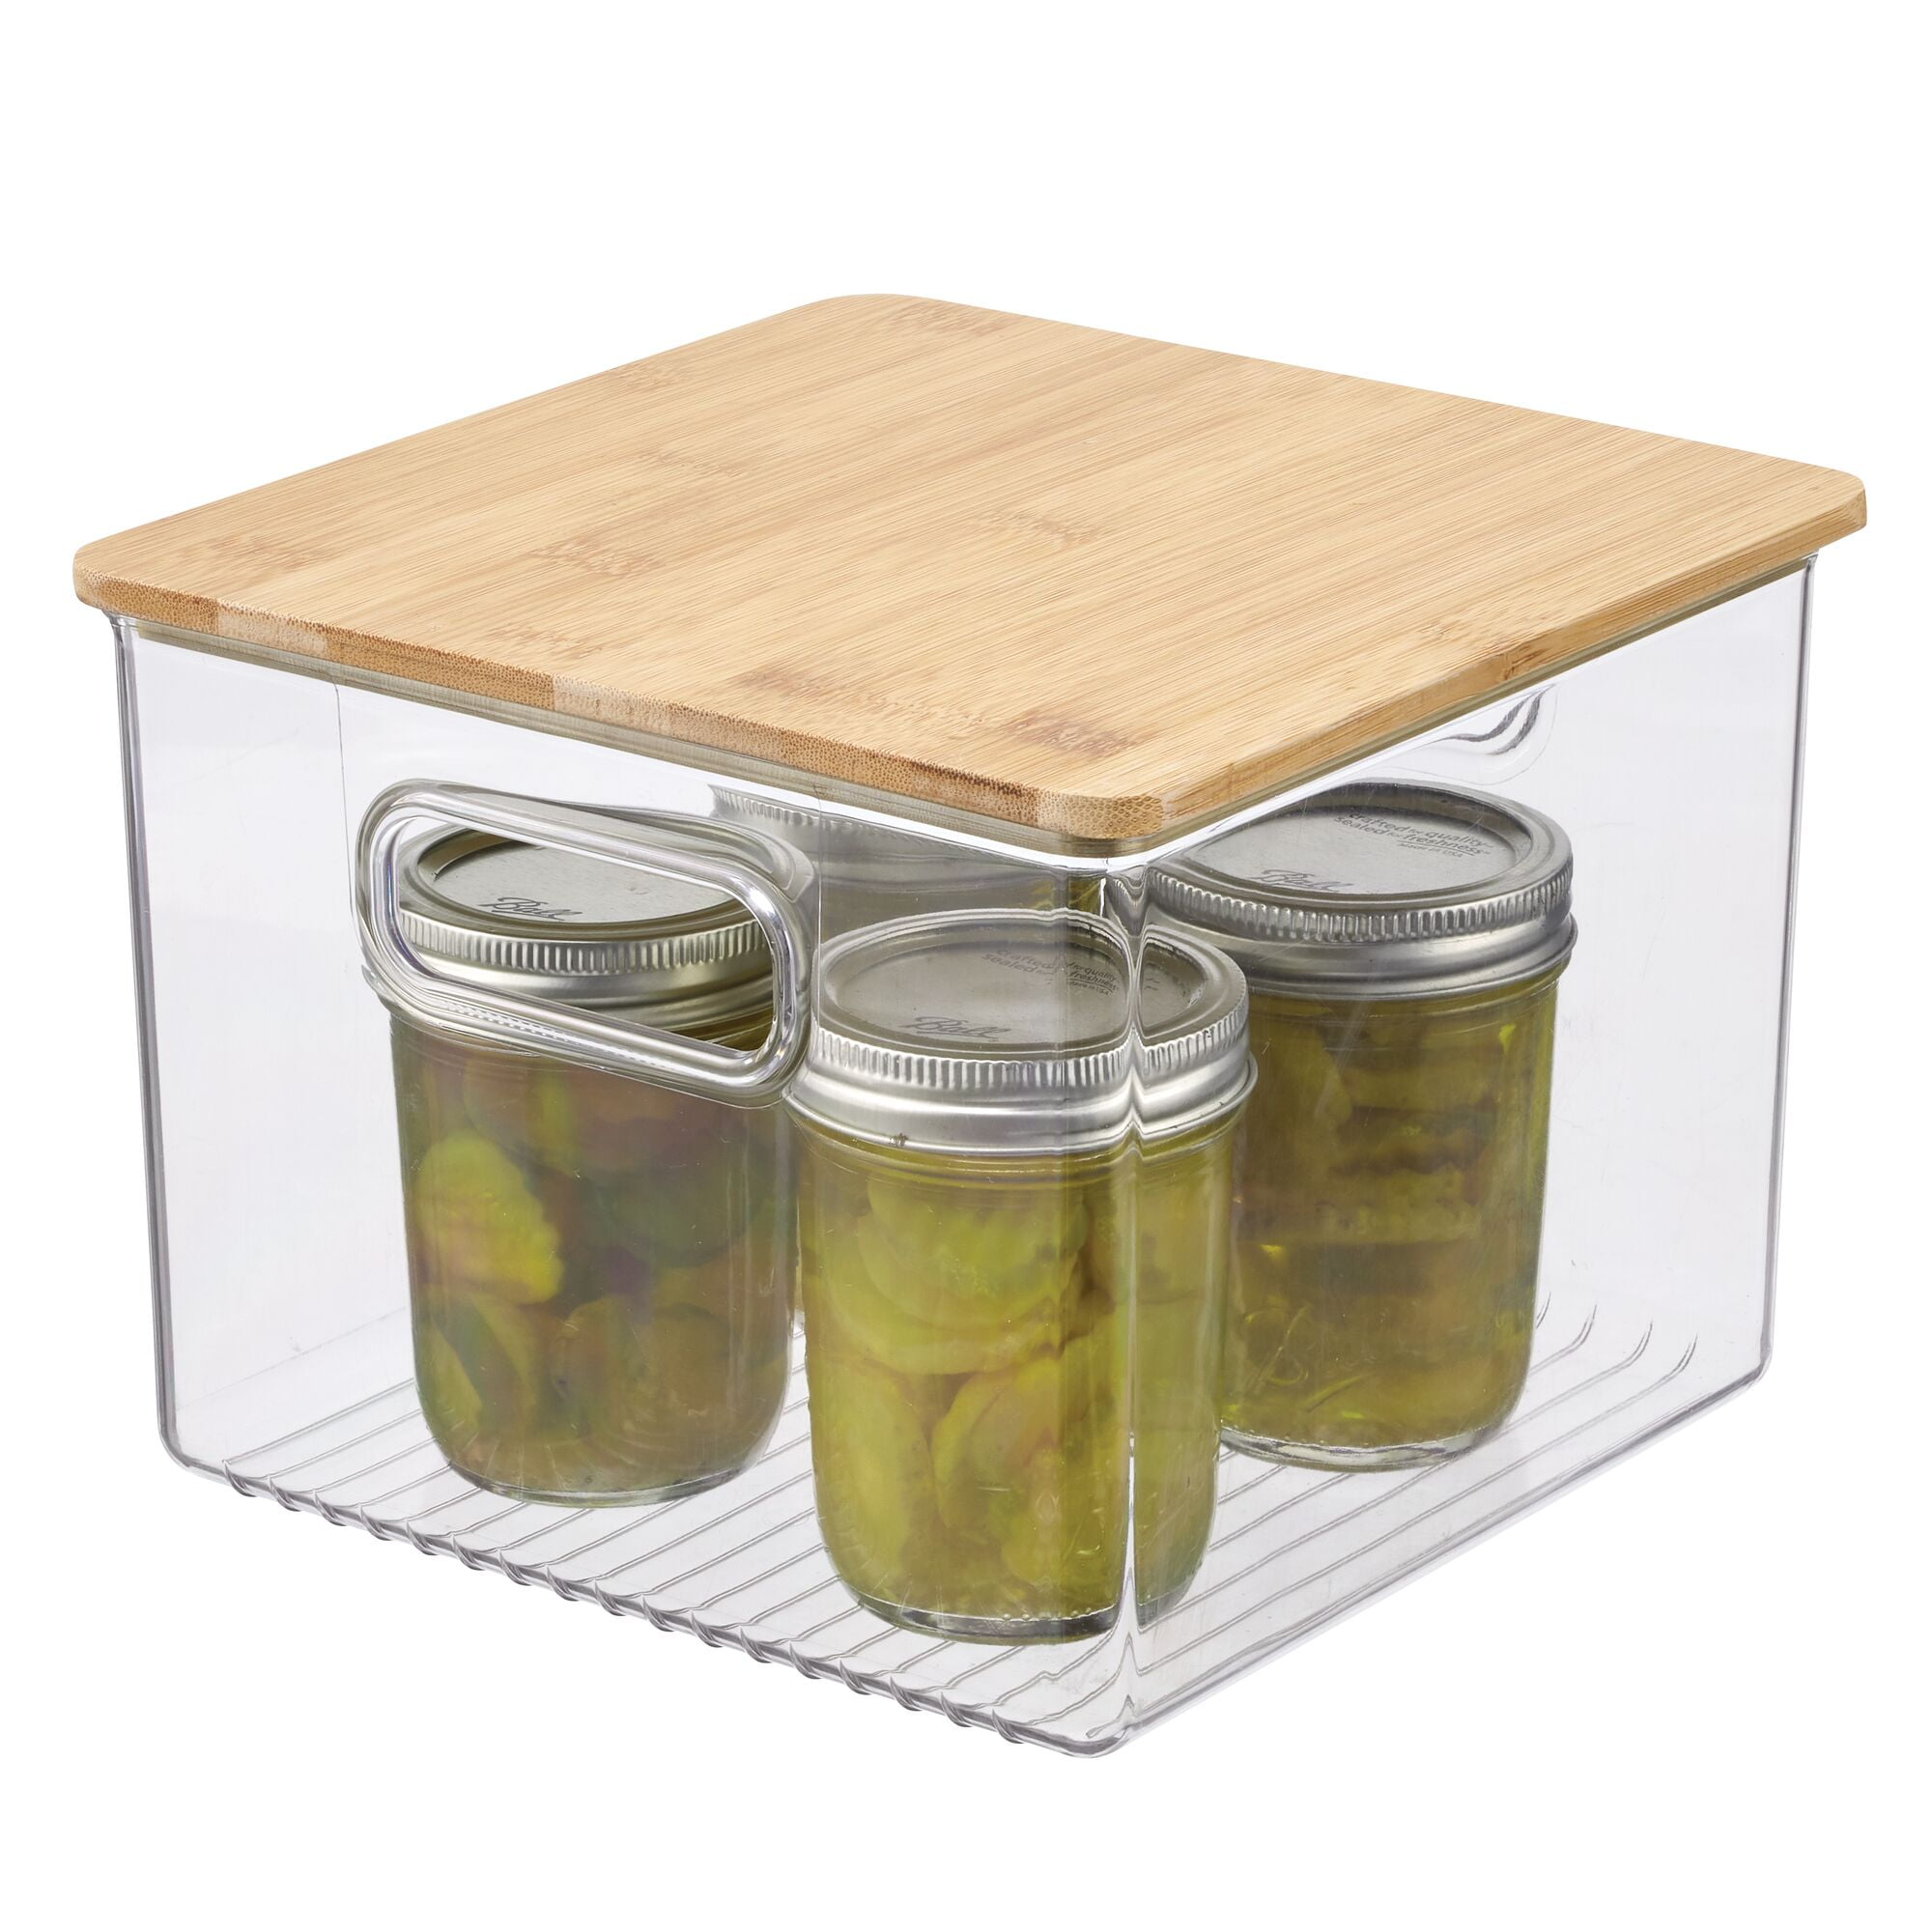 mDesign Formbu Natural Bamboo Kitchen Storage Bin Container Organizer Box, 4 Pack - 4 x 4 x 2.36